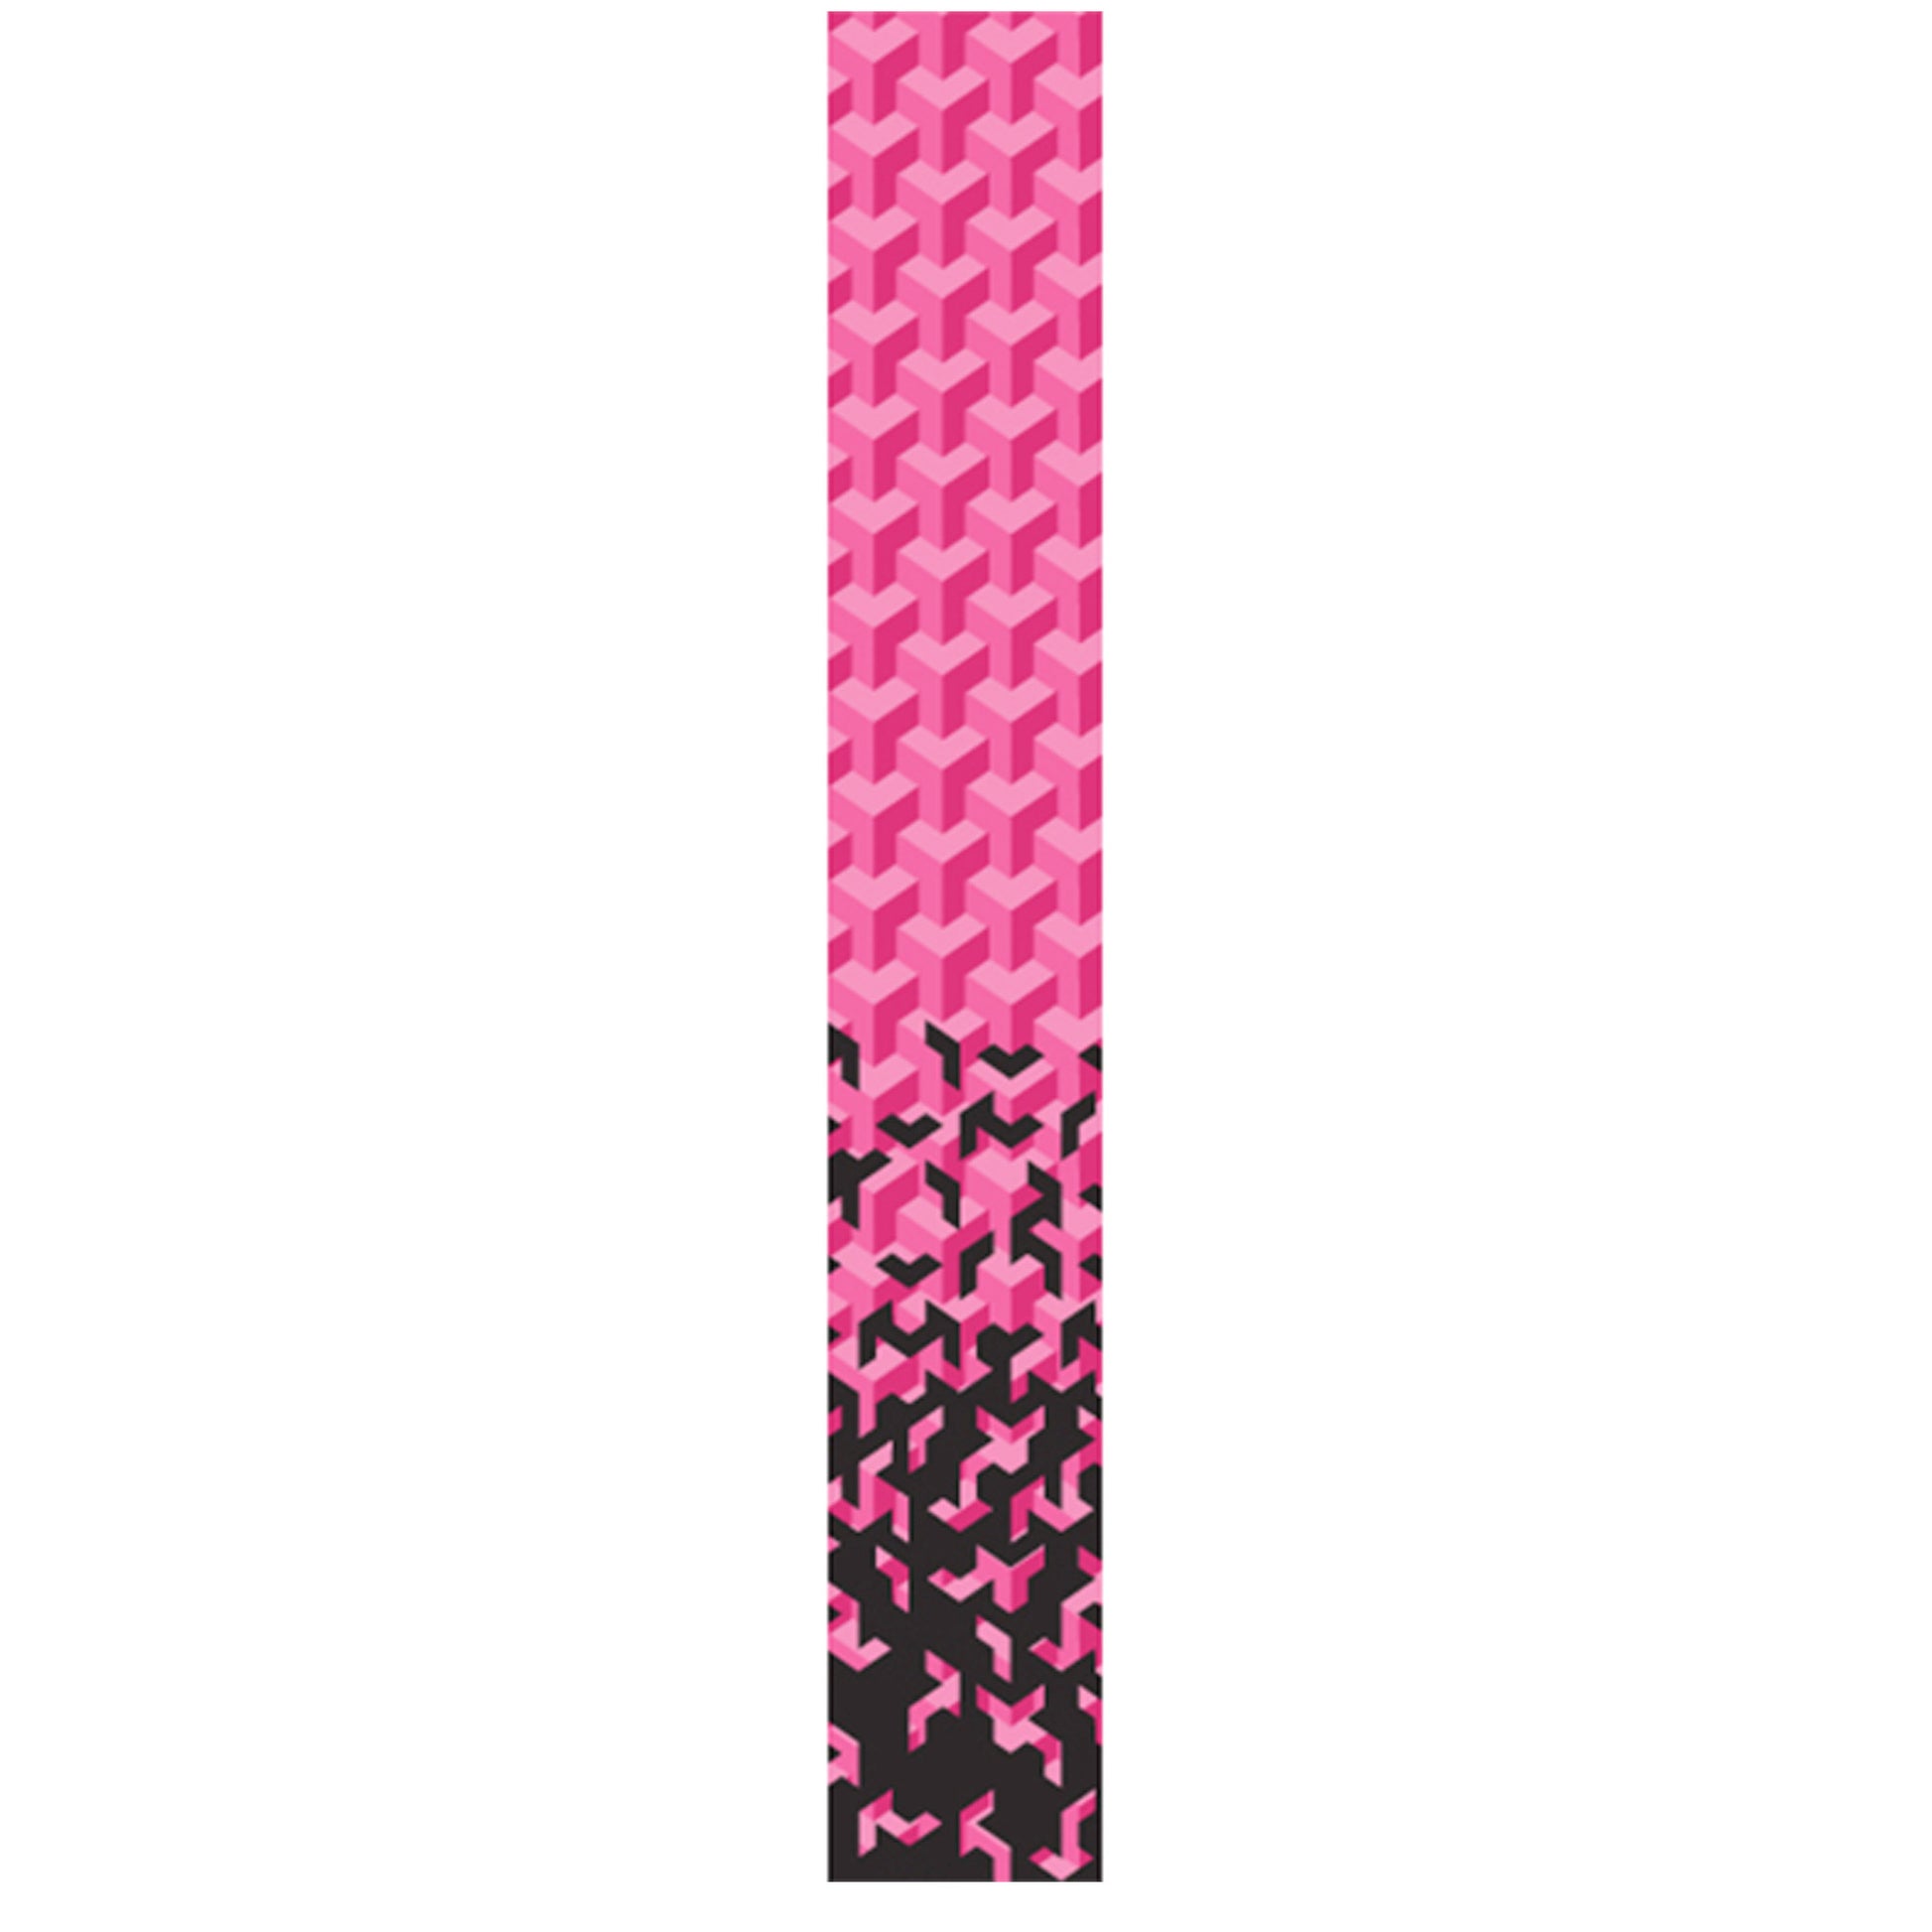 Arundel Art Gecko Bar Tape, Pink buy at Woolys Wheels Sydney